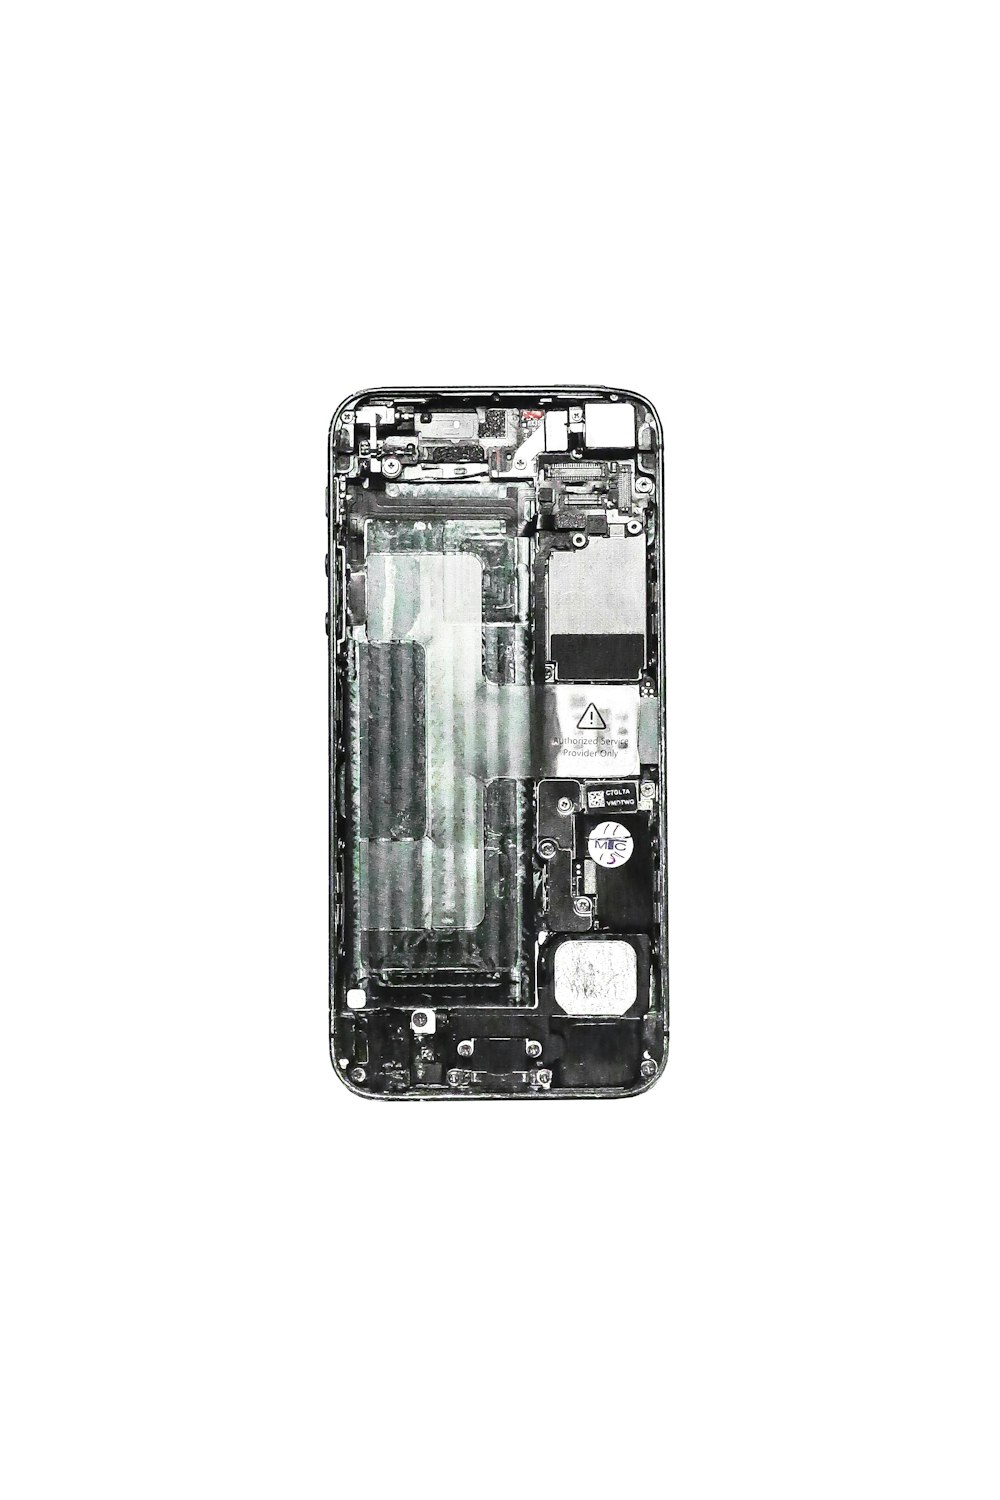 smartphone Android noir sur surface blanche